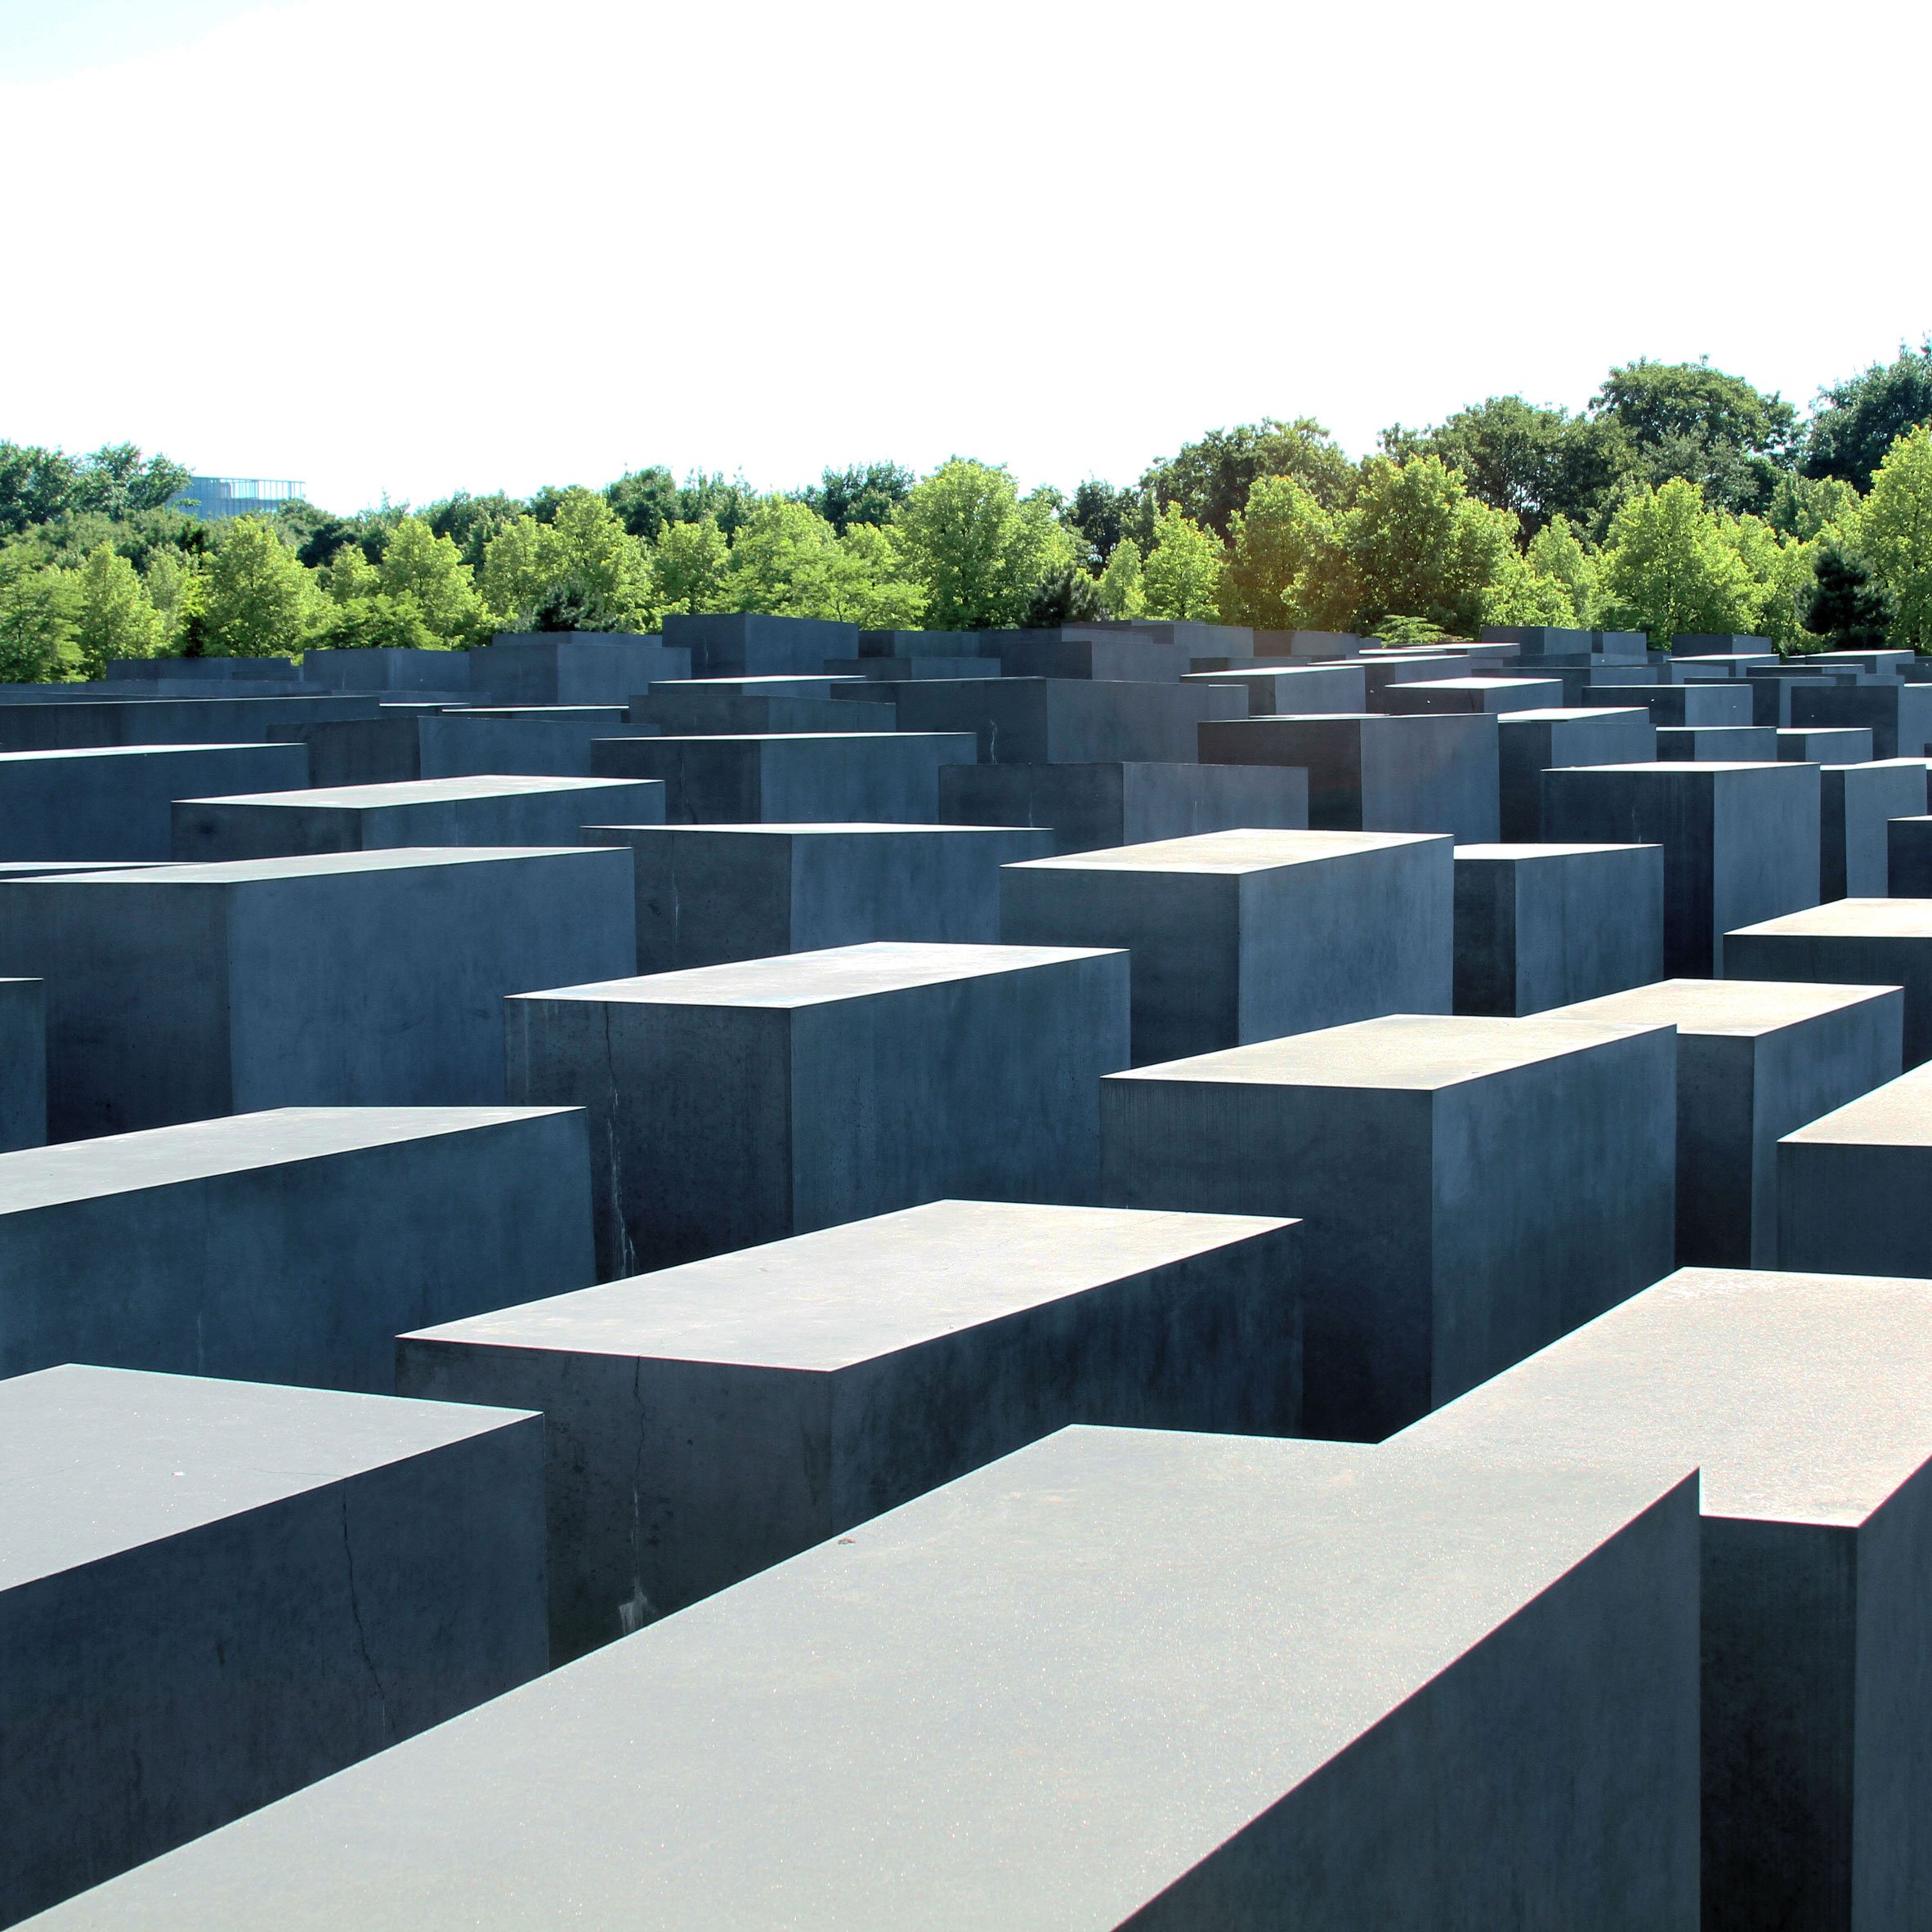 Berlin holocaust memorial wouldnt be built today says peter eisenman